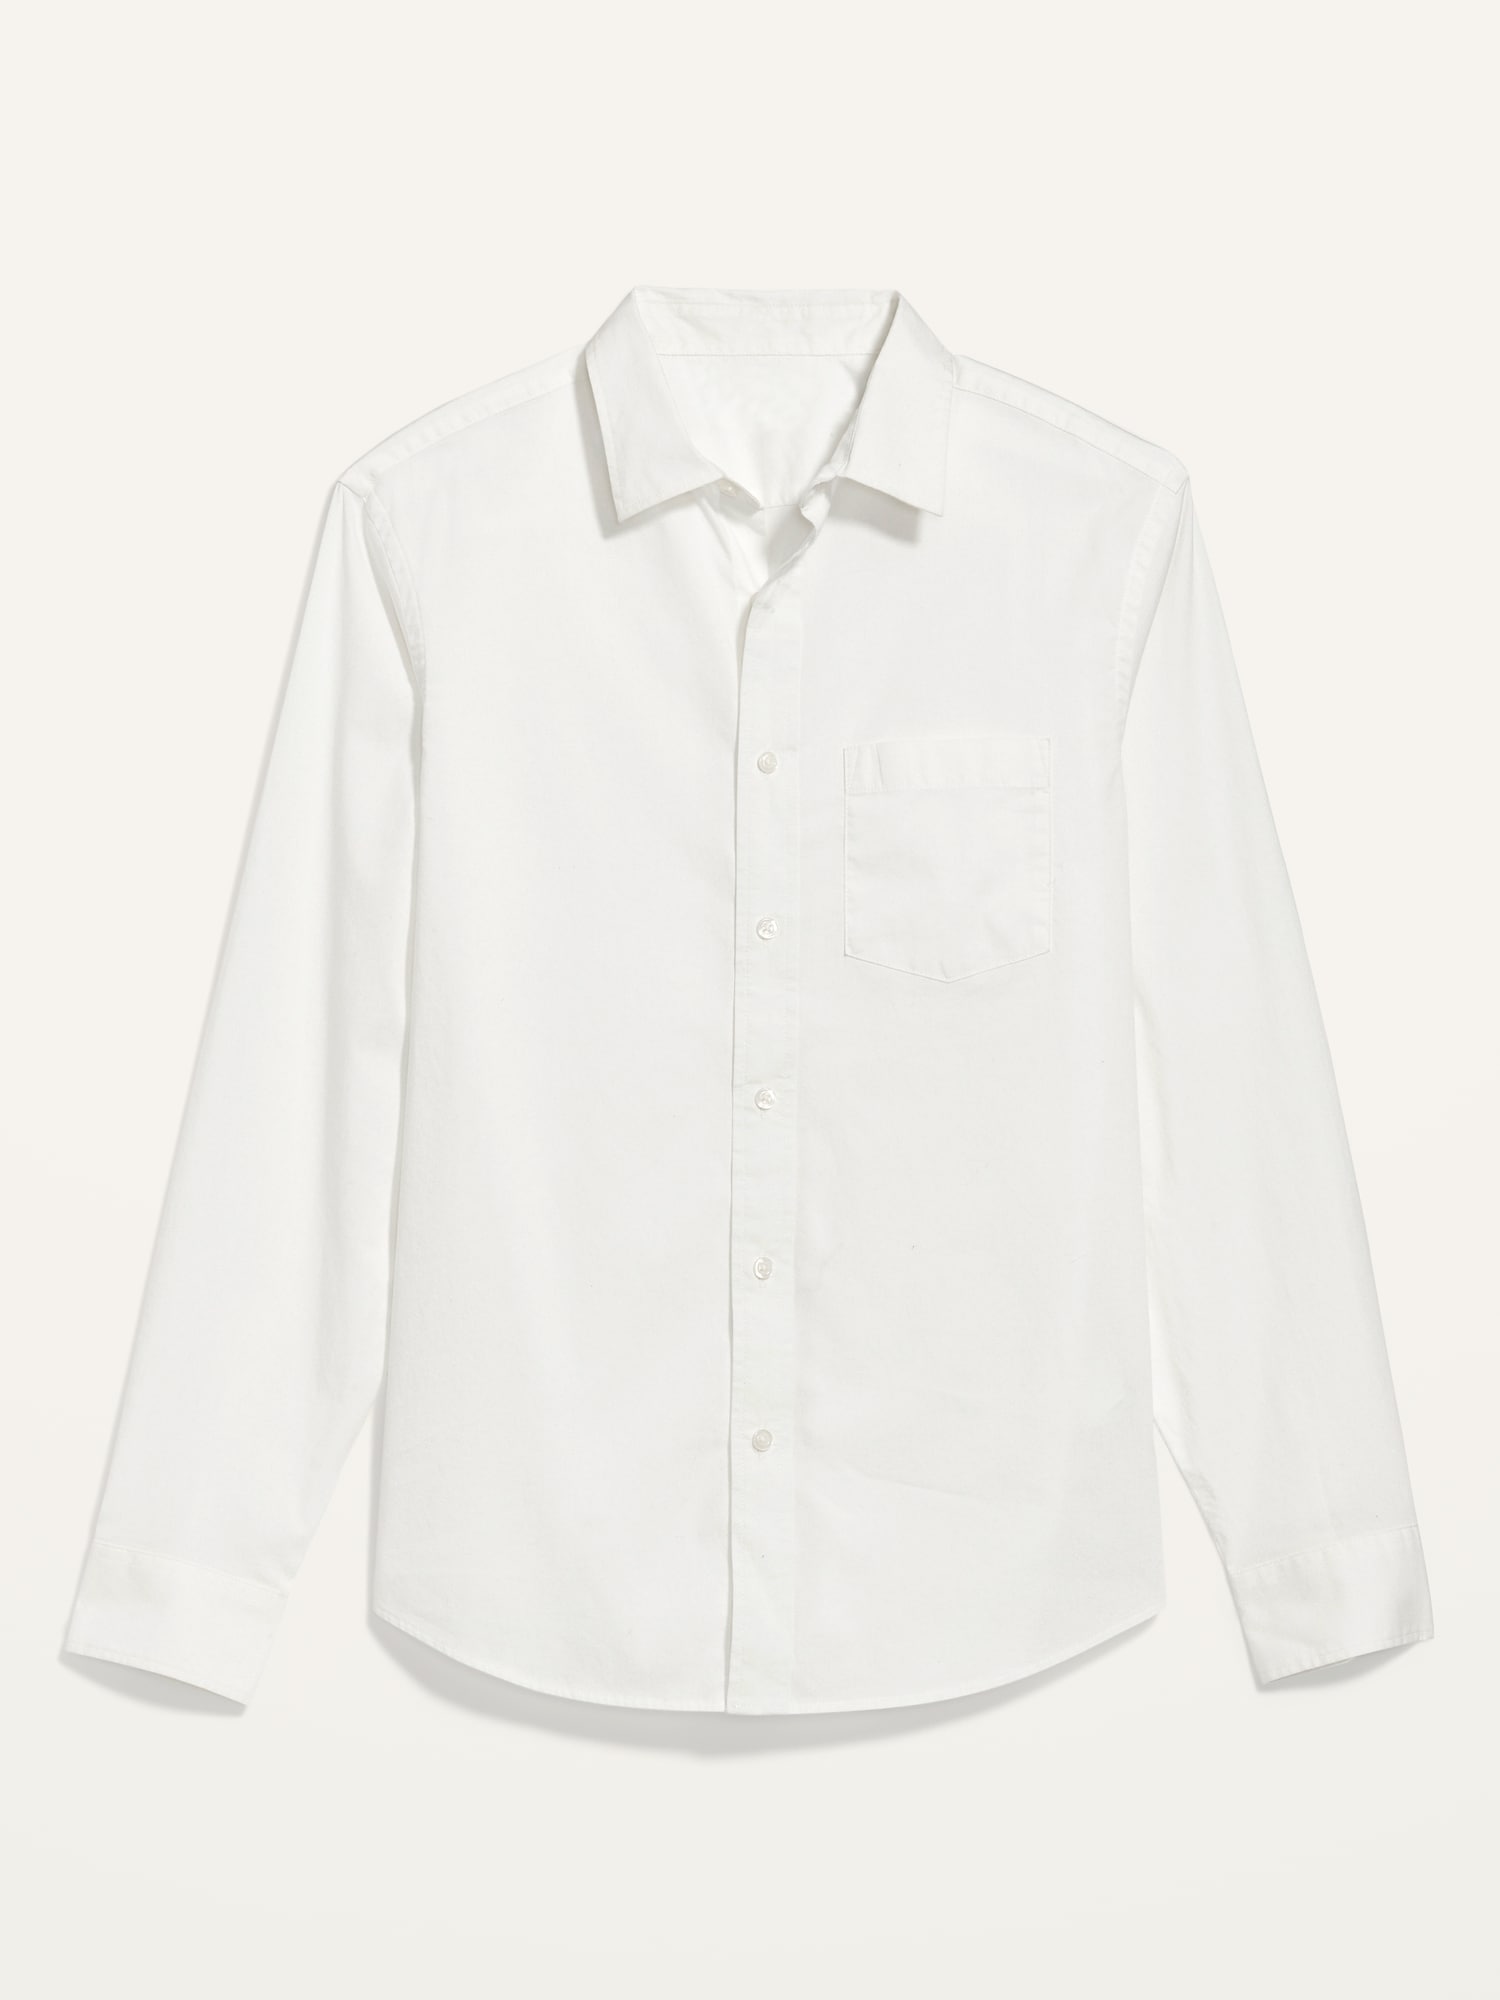 Old Navy Men's Regular-Fit Built-in Flex Everyday Shirt - White - Size L